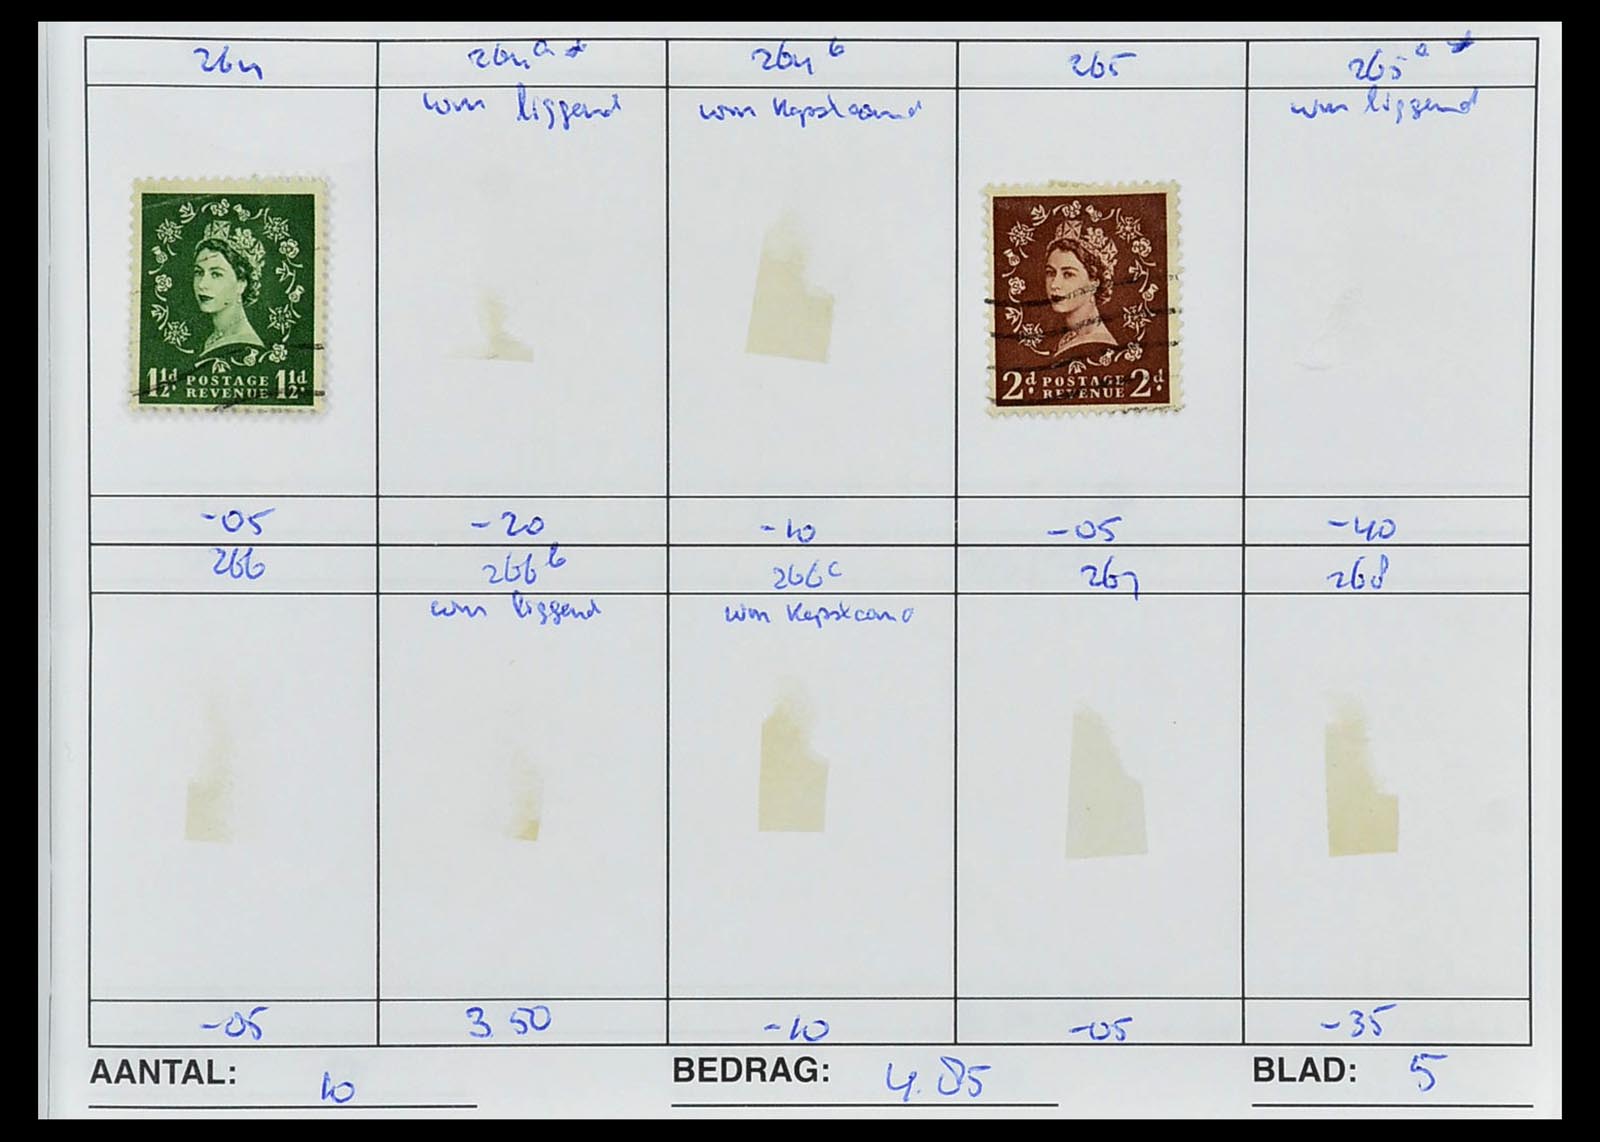 34612 0048 - Stamp Collection 34612 Wereld rondzendboekjes.